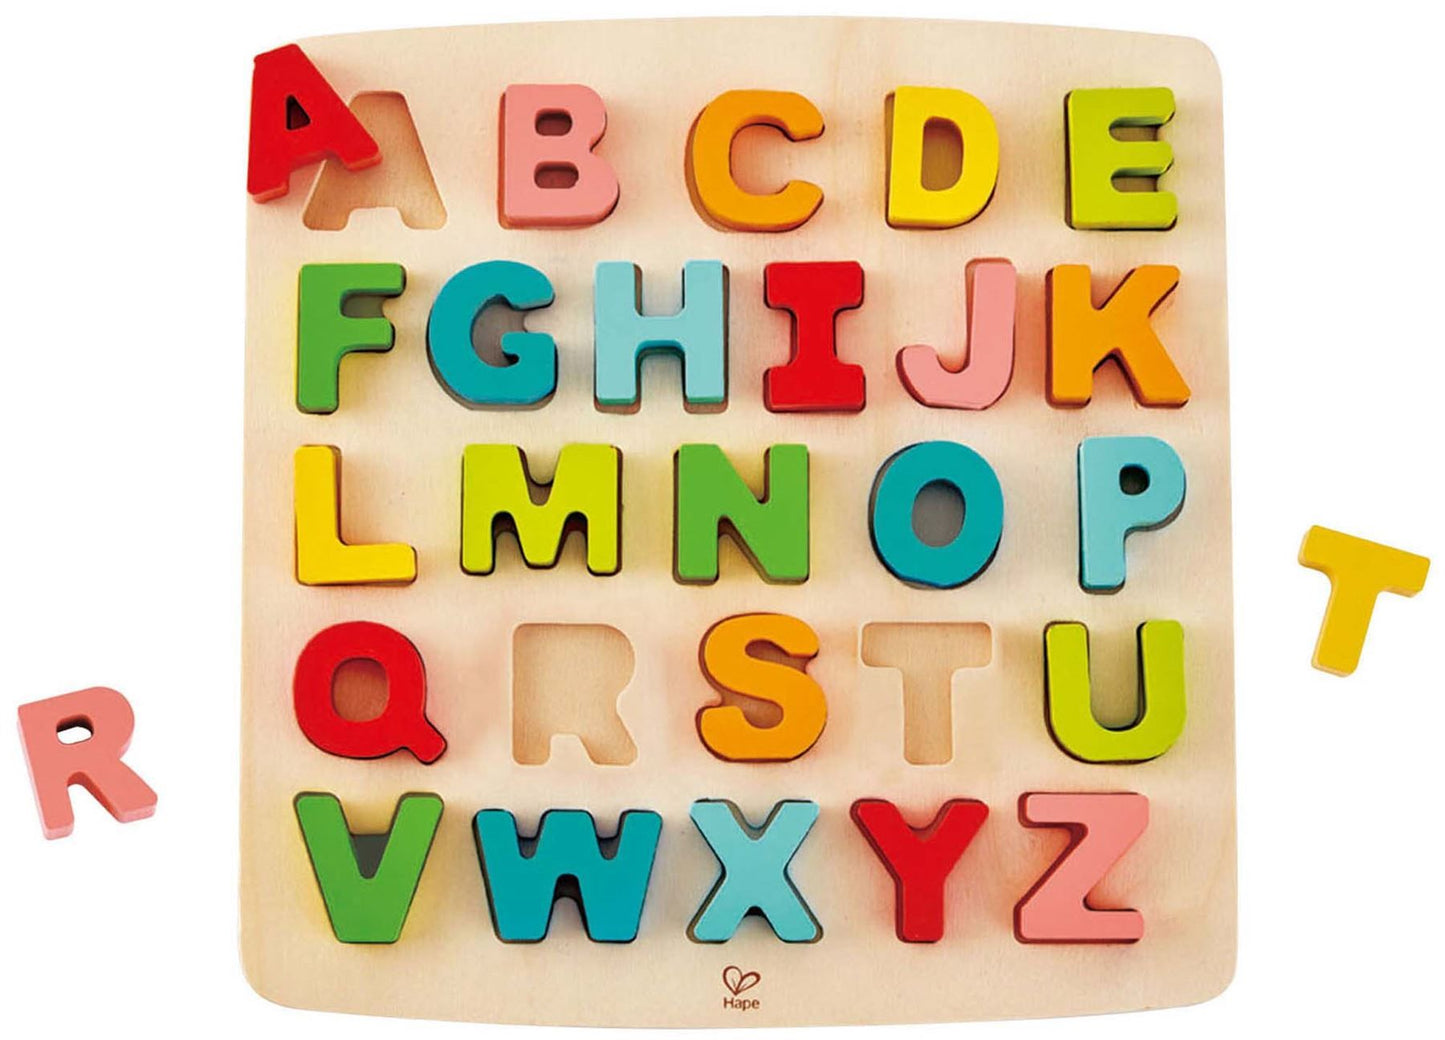 Alfabet puzzel